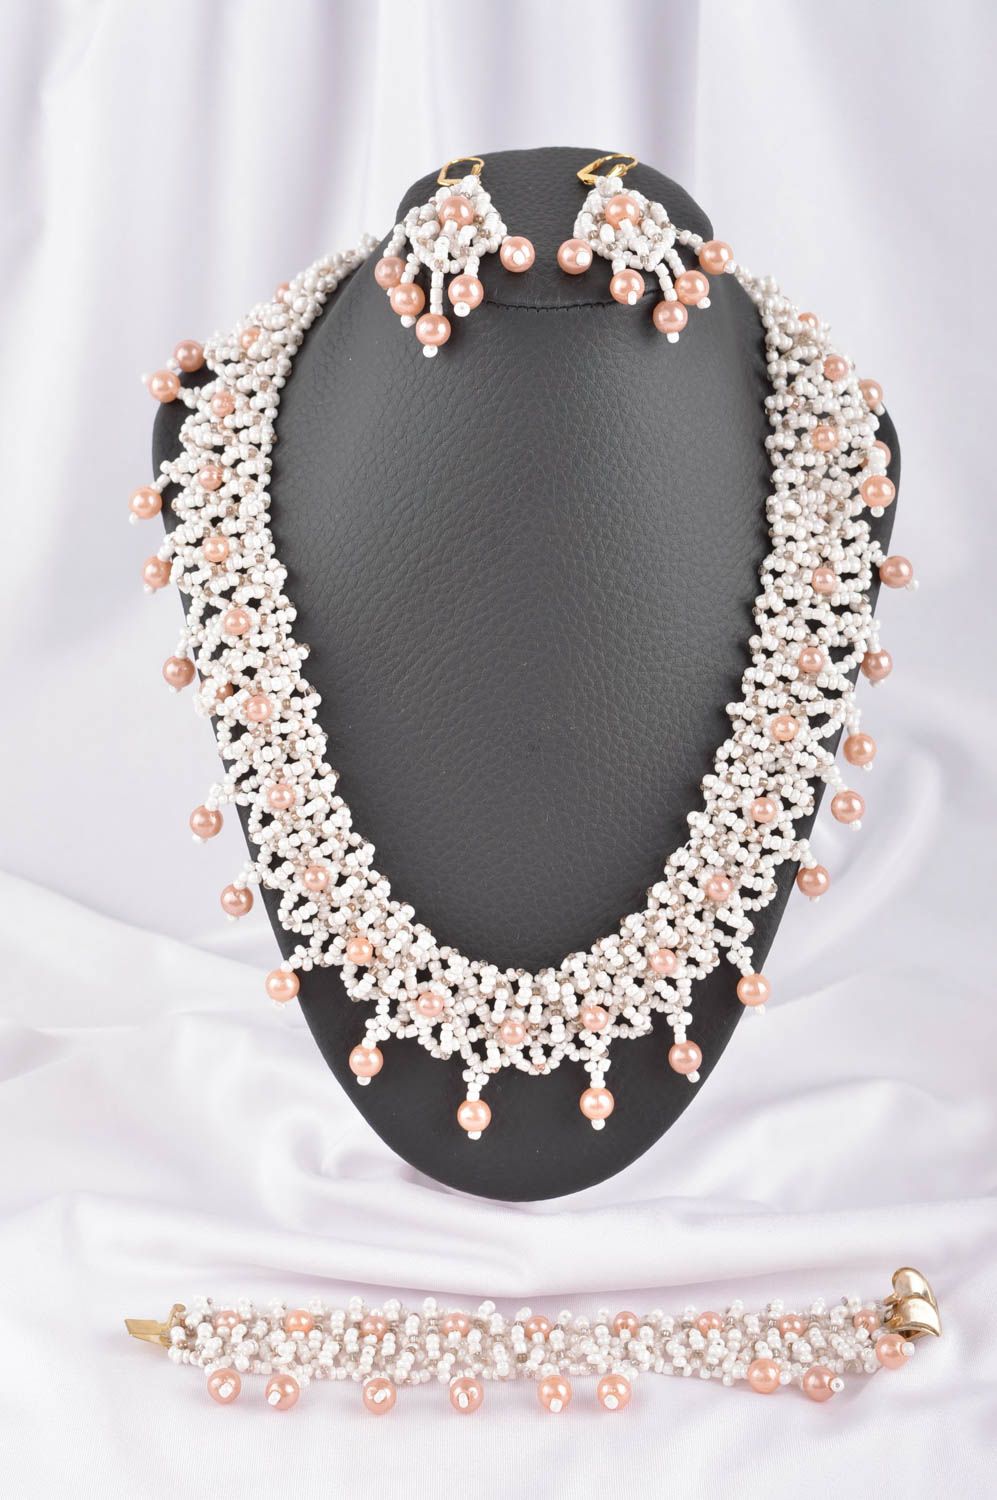 Handmade accessories beautiful jewelry gift ideas unusual gift for women photo 1